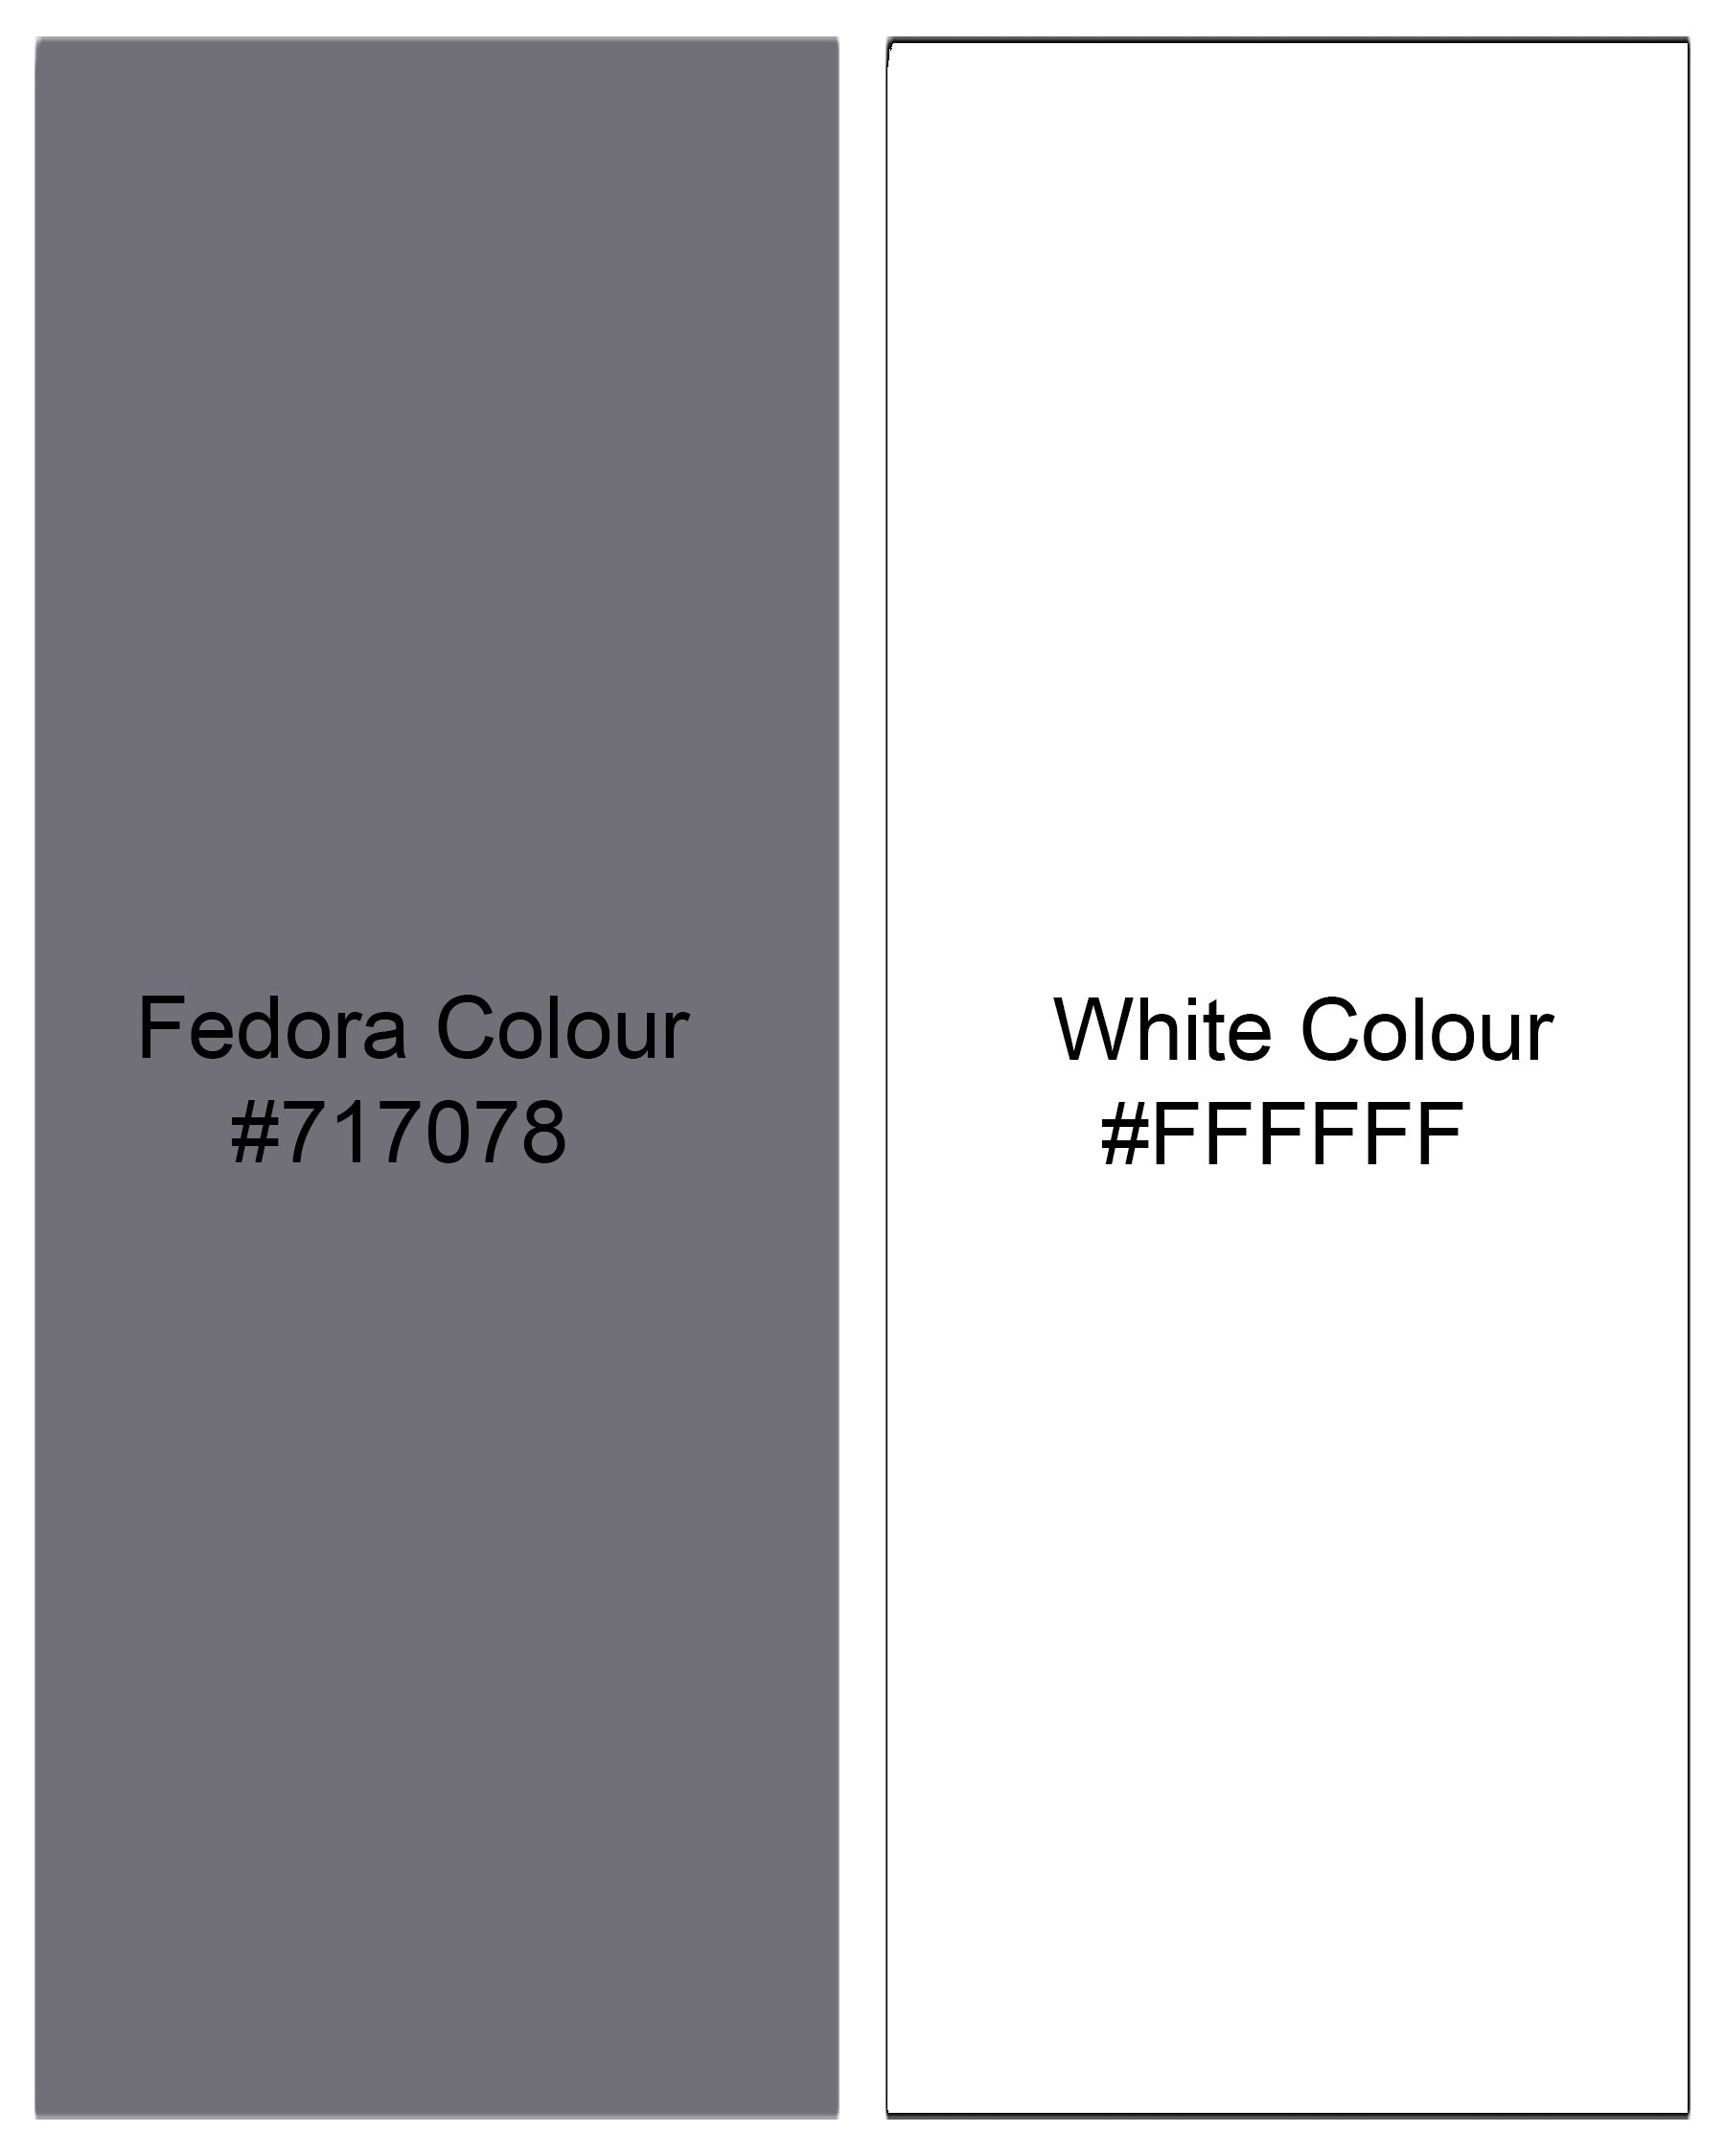 Fedora Gray and White Pin Striped Royal Oxford Shirt 7969-38, 7969-H-38, 7969-39, 7969-H-39, 7969-40, 7969-H-40, 7969-42, 7969-H-42, 7969-44, 7969-H-44, 7969-46, 7969-H-46, 7969-48, 7969-H-48, 7969-50, 7969-H-50, 7969-52, 7969-H-52